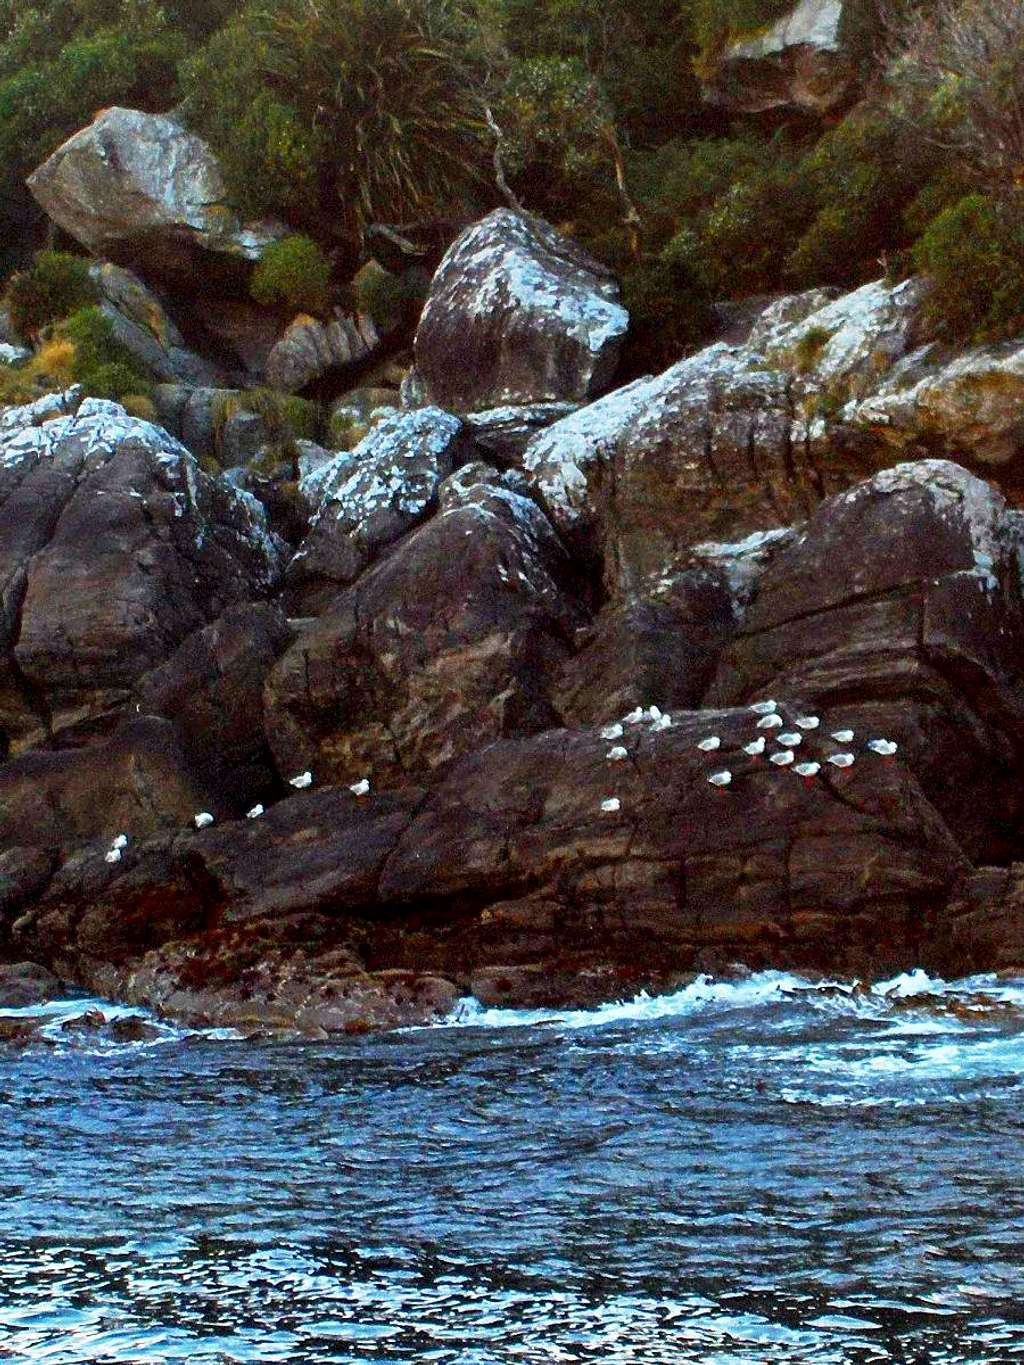 Seagull colony